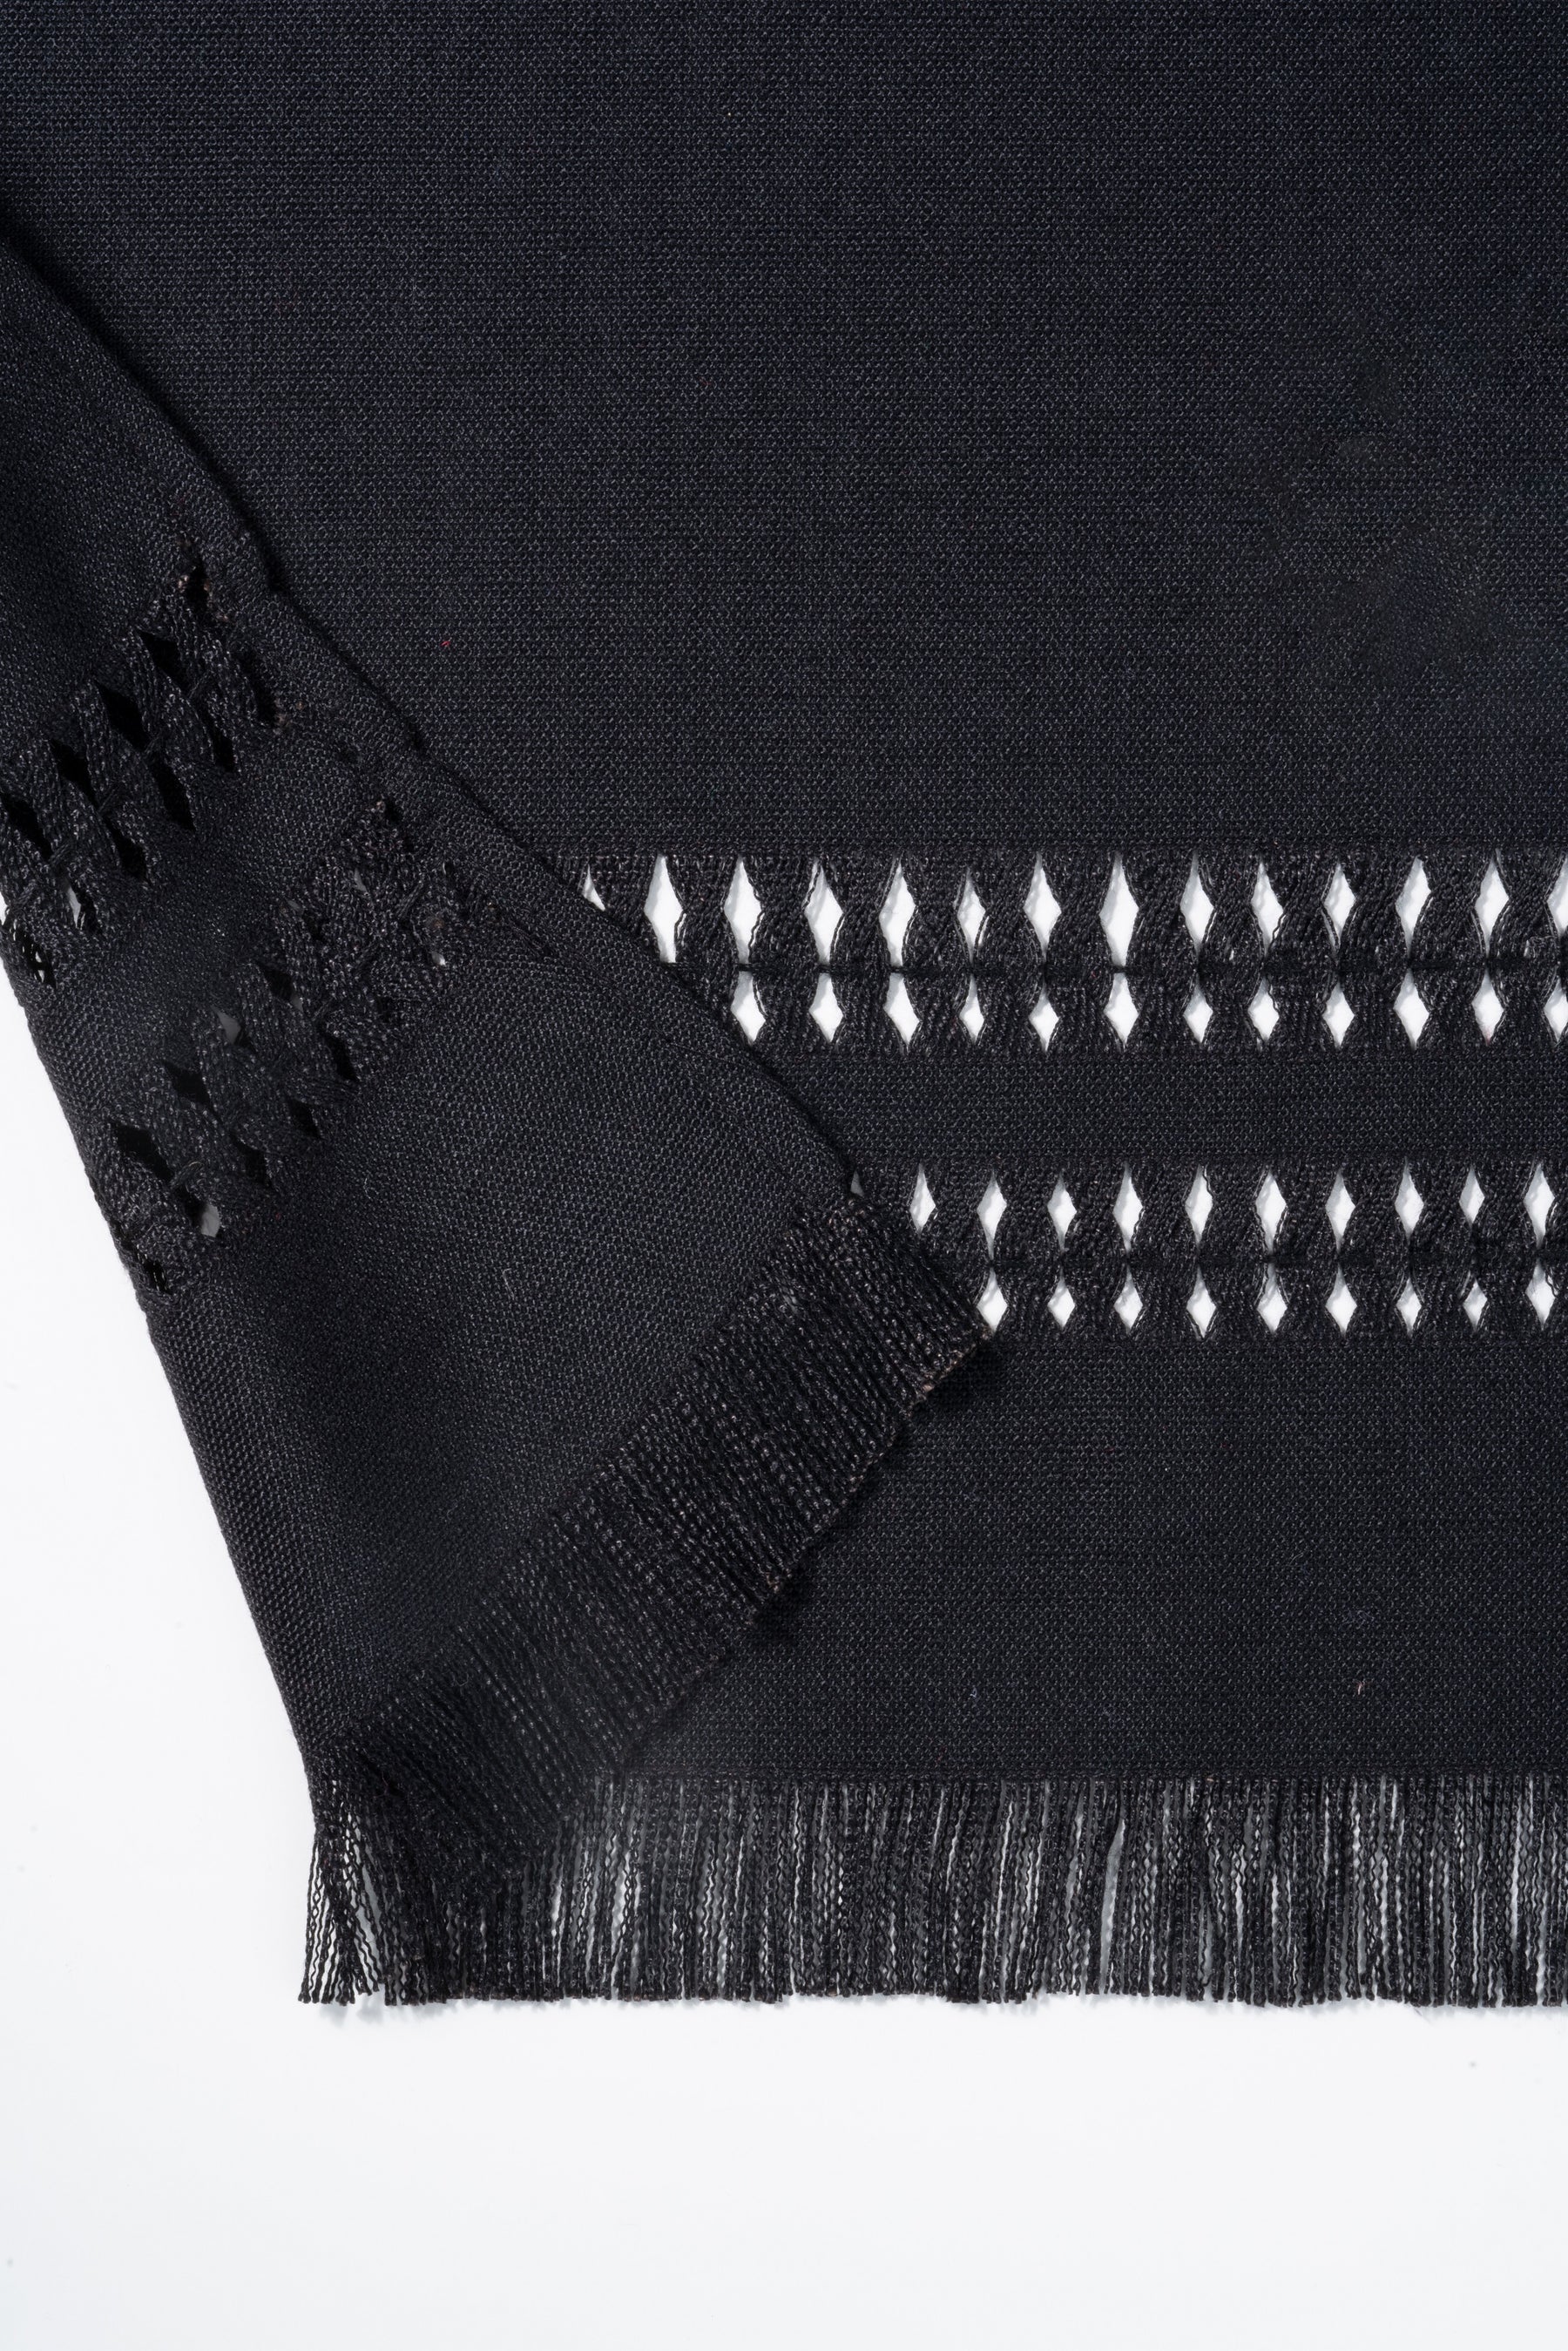 Black Linen Textured Table Runner - Hand Hemstitch